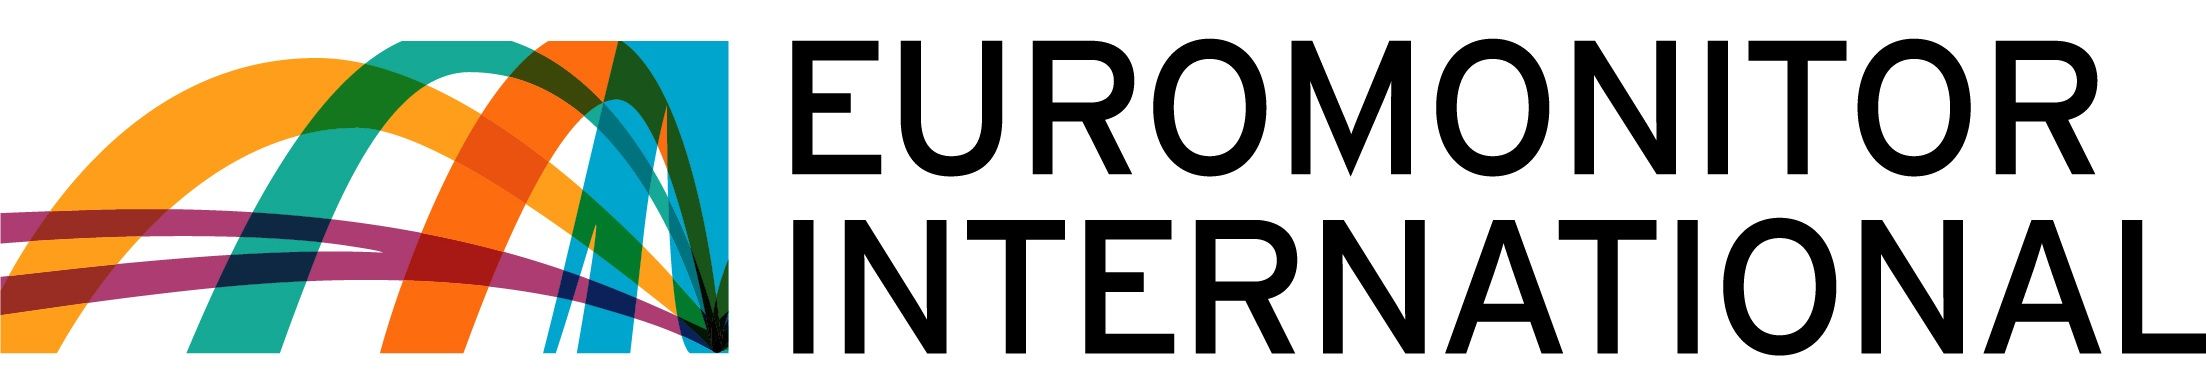 Euromonitor-logo-v2-(1)